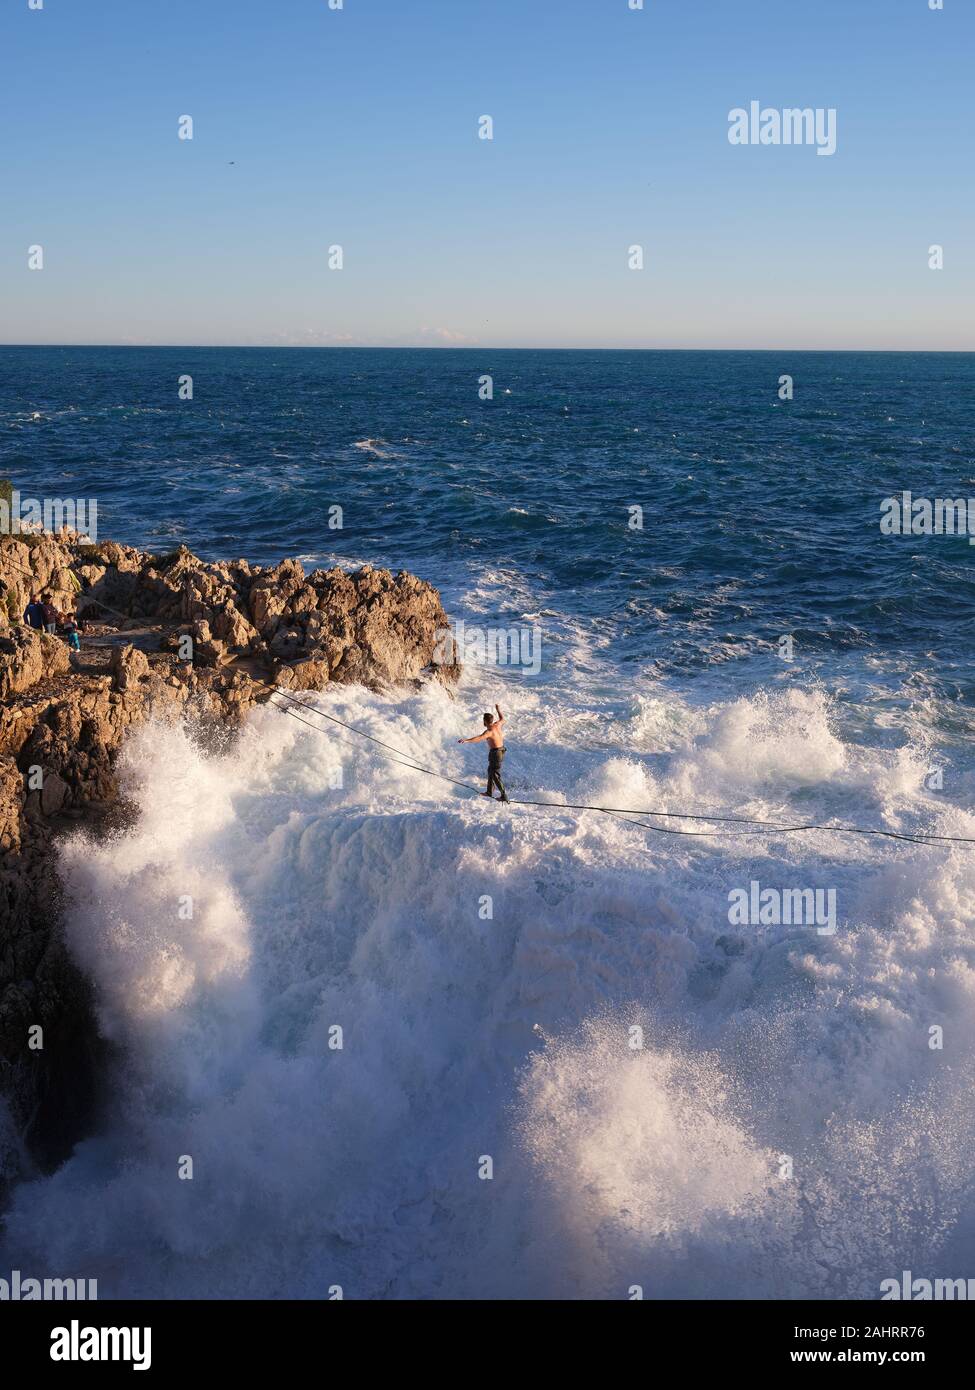 Young man slacklining above big waves crashing on a rocky coastline. Cap de Nice, French Riviera, Alpes-Maritimes, France. Stock Photo